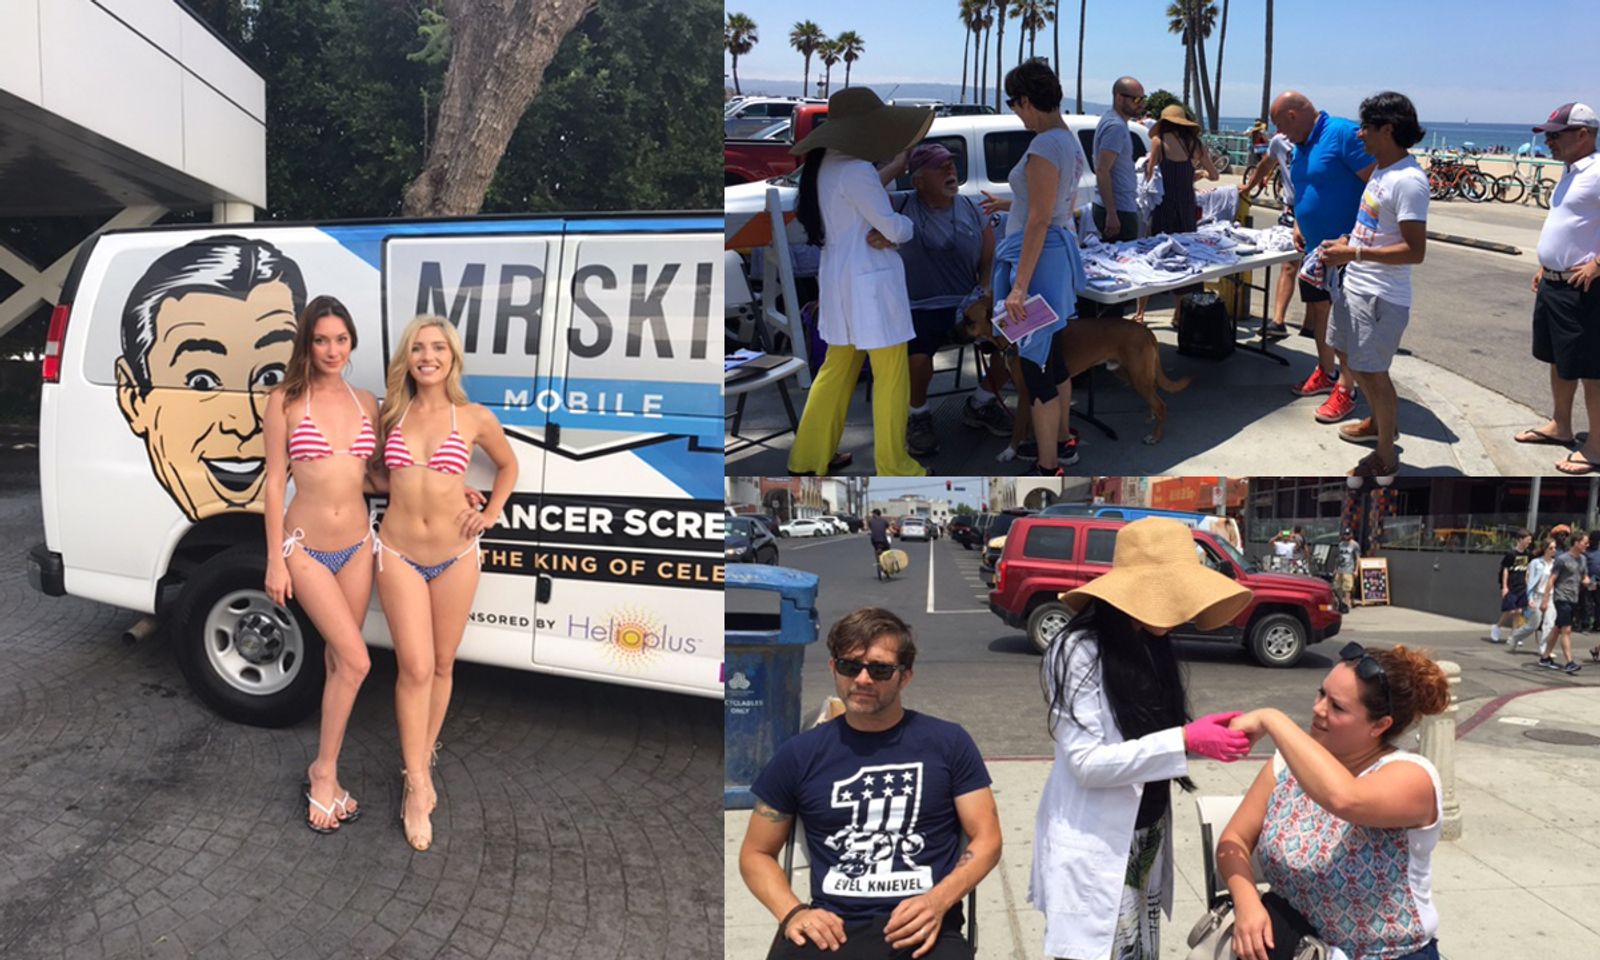 Mr. Skin Mobile Hits the Beach in L.A.